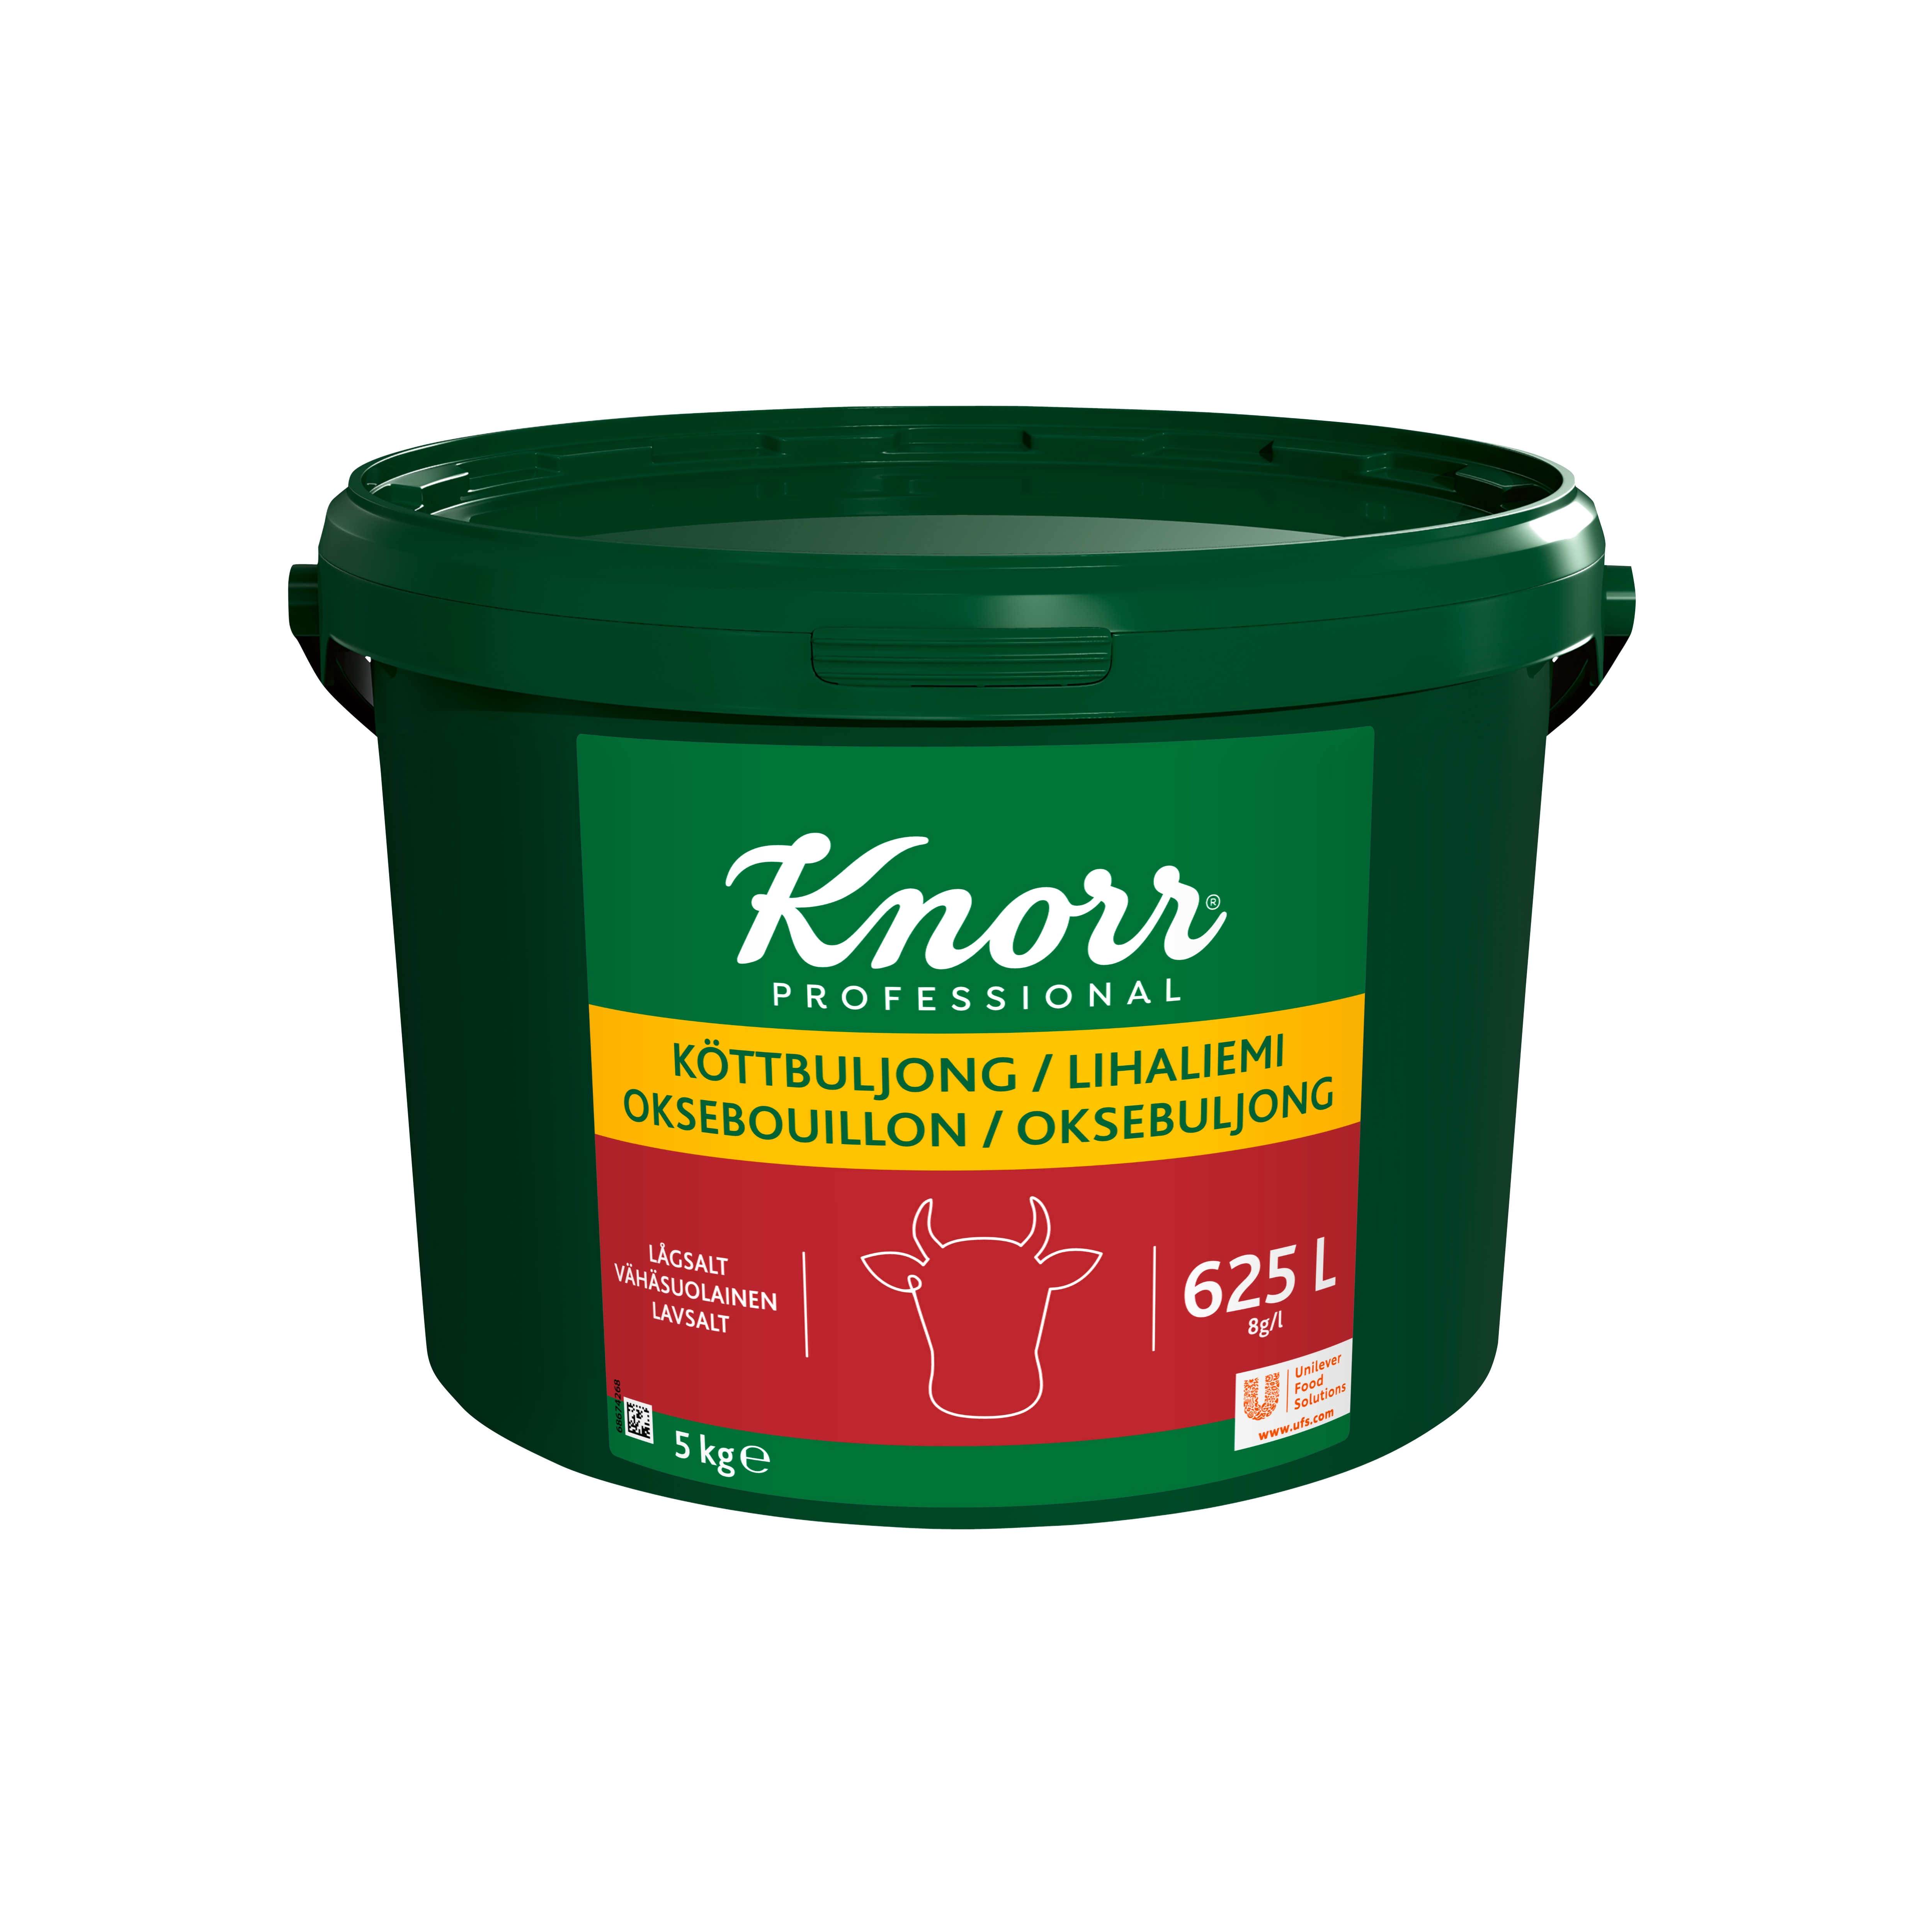 Knorr Köttbuljong lågsalt 1x5kg - 